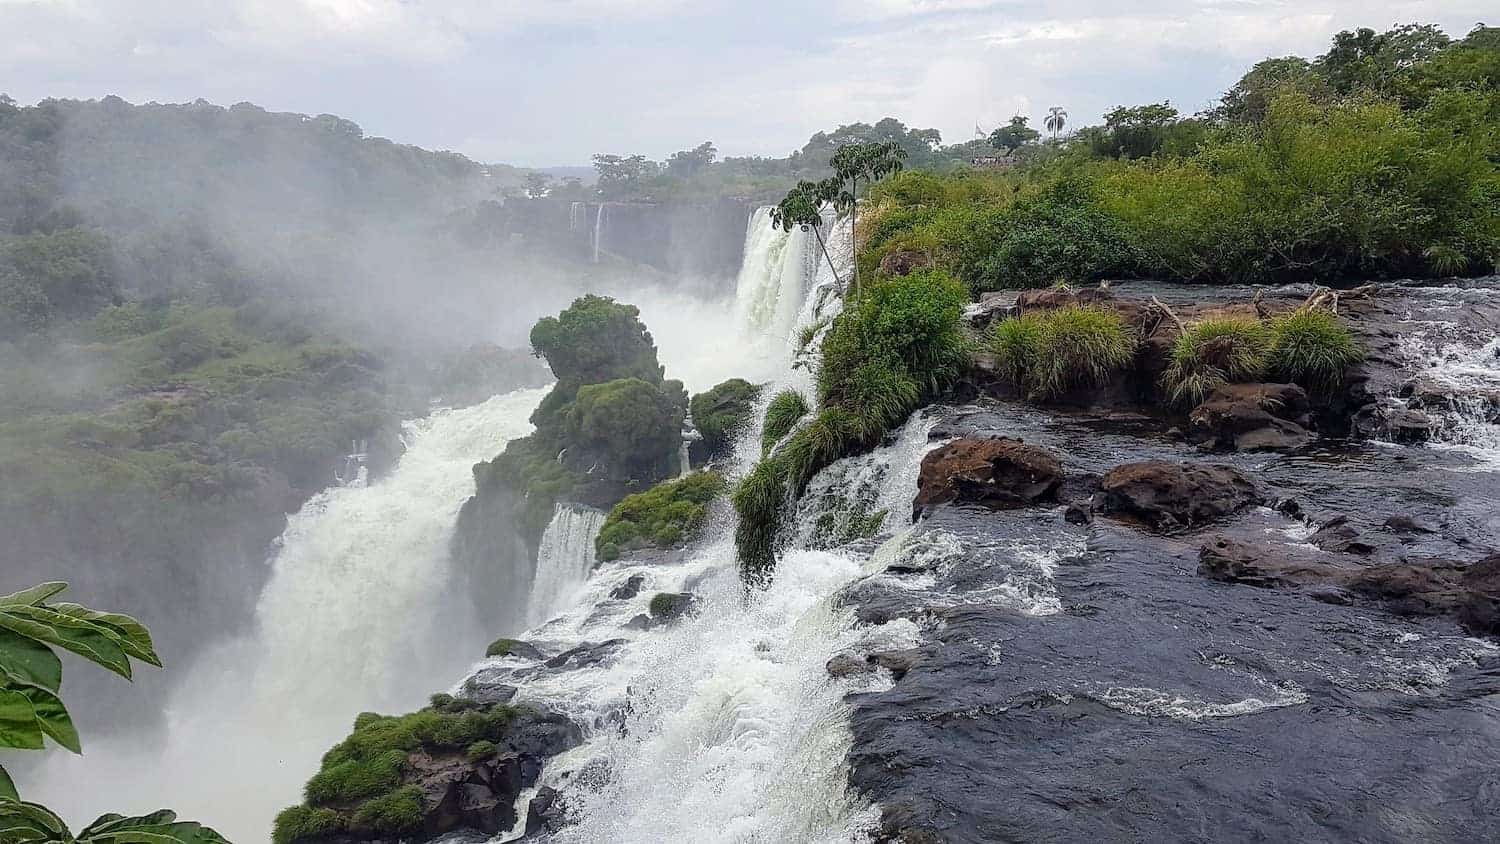 Puerto Iguazu